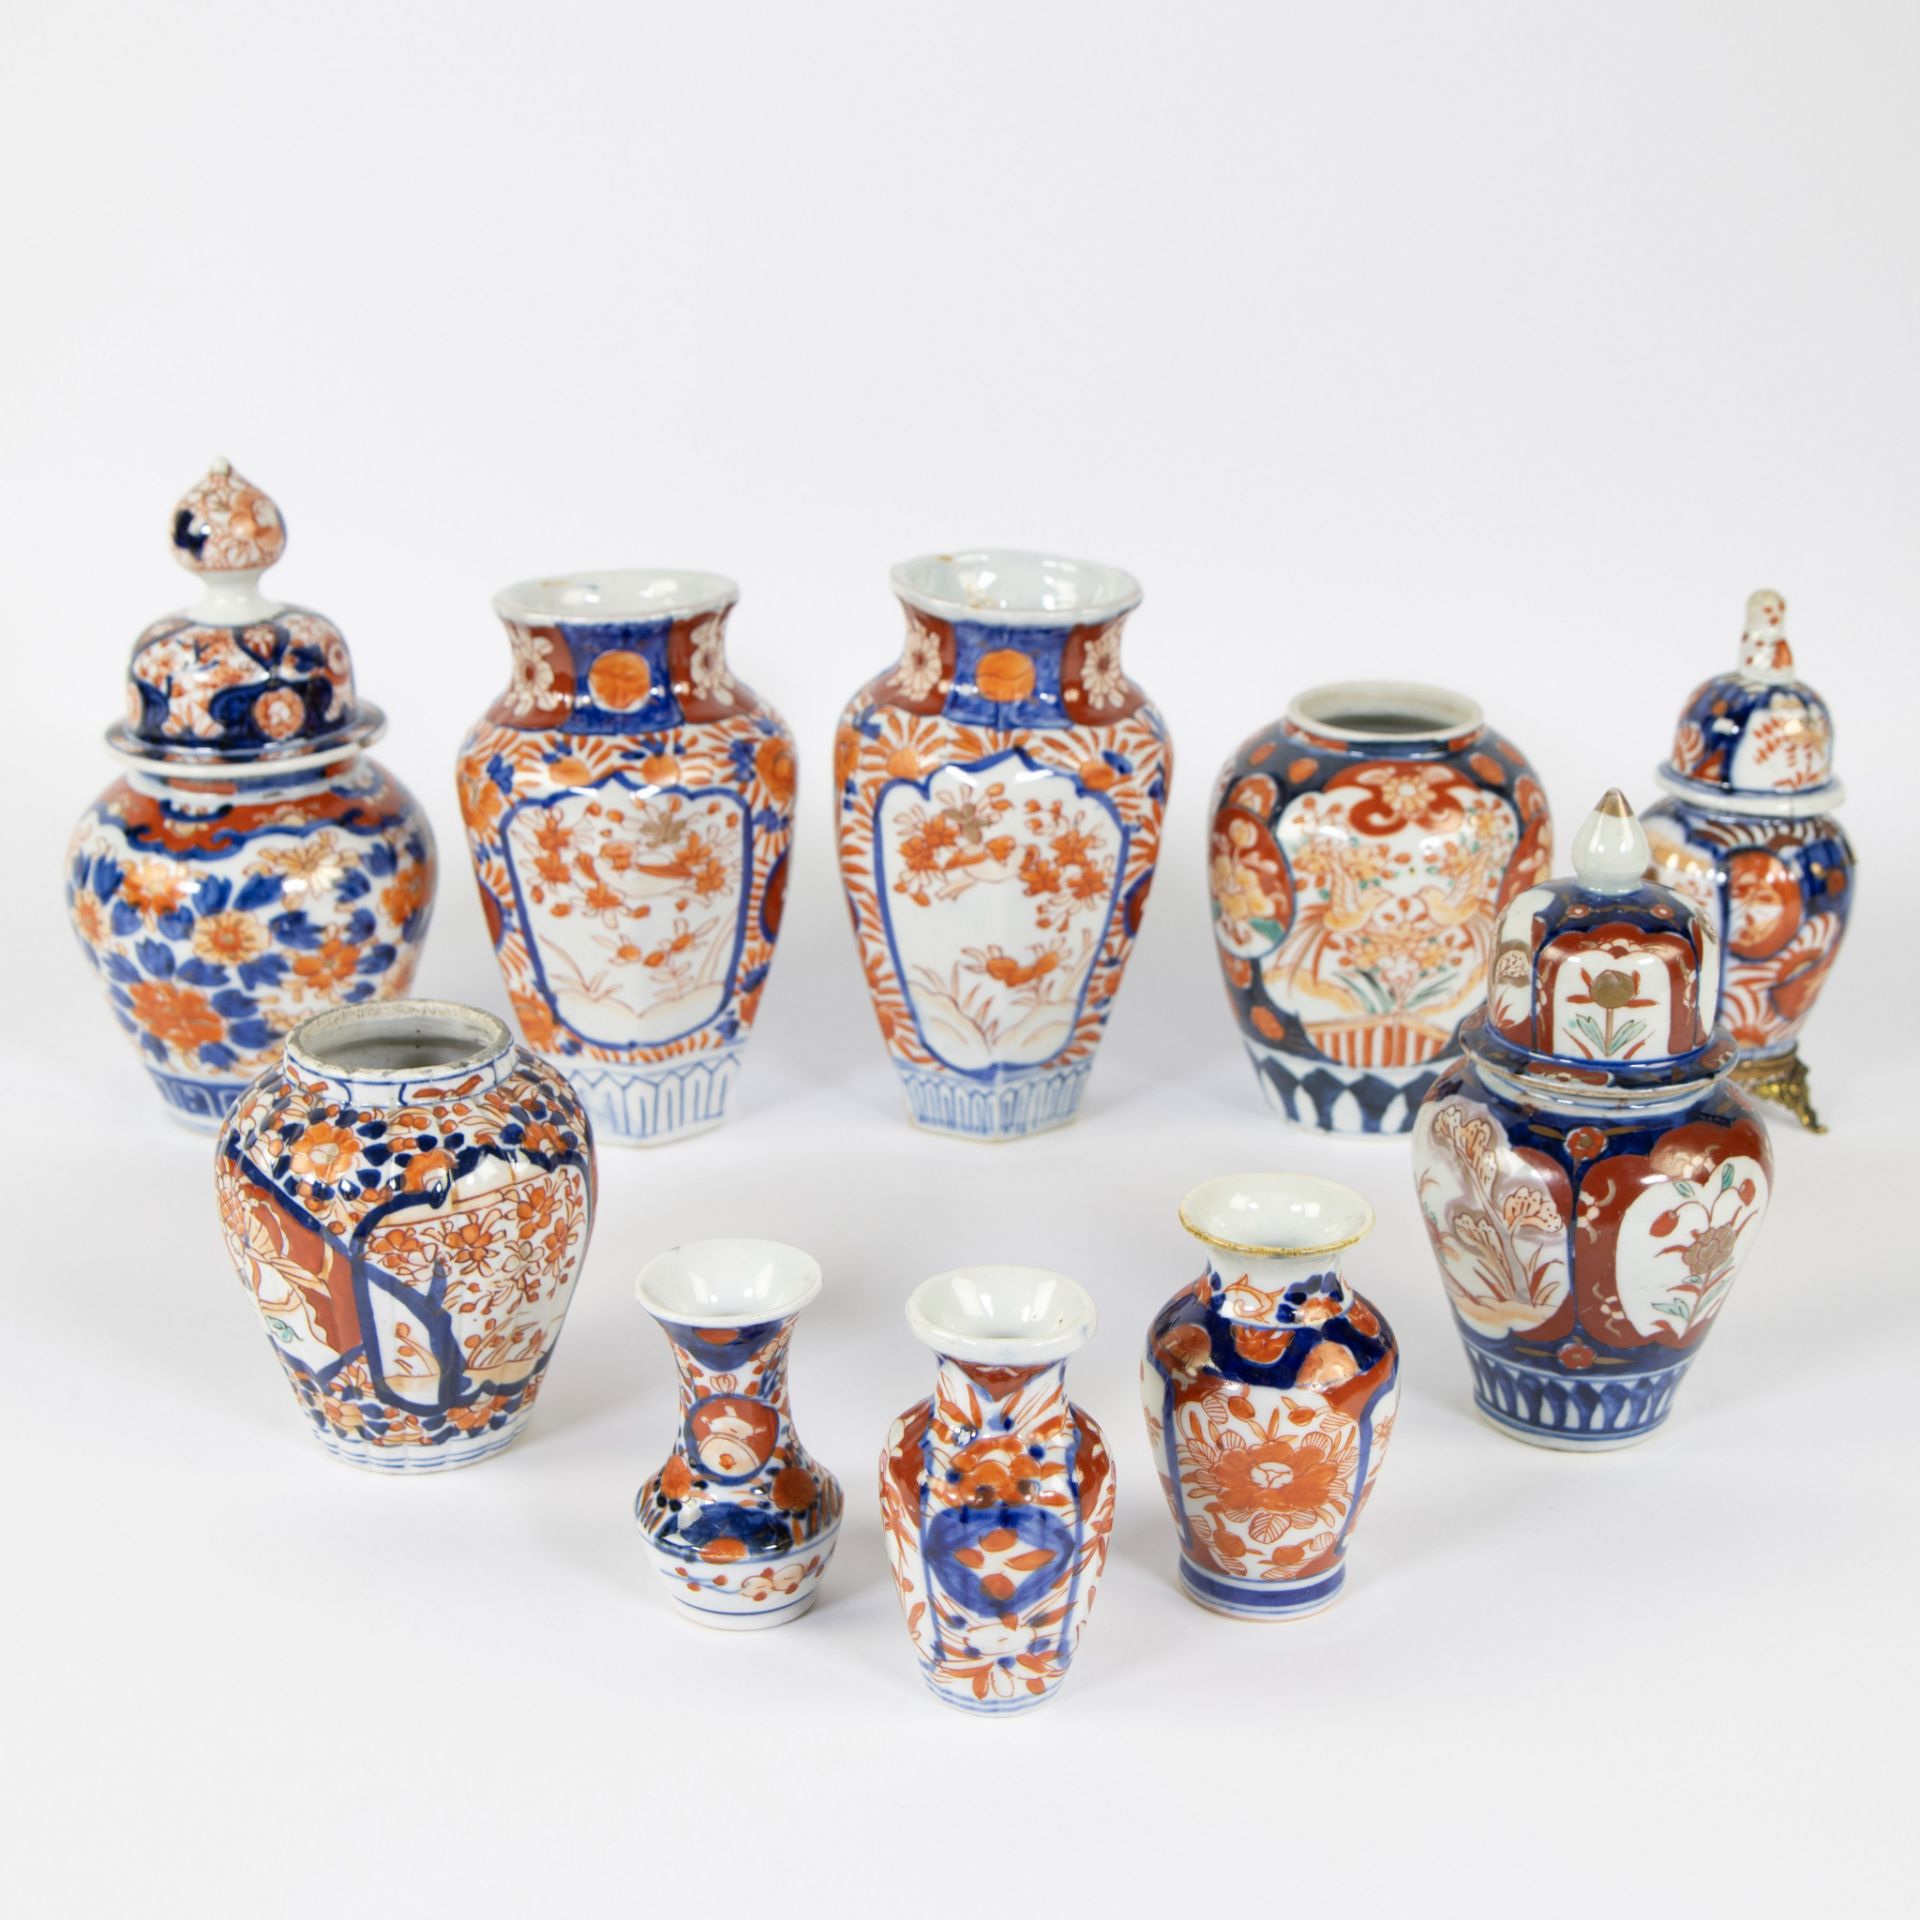 Large lot of Japanese porcelain Imari vases and lidded vases, 19th century